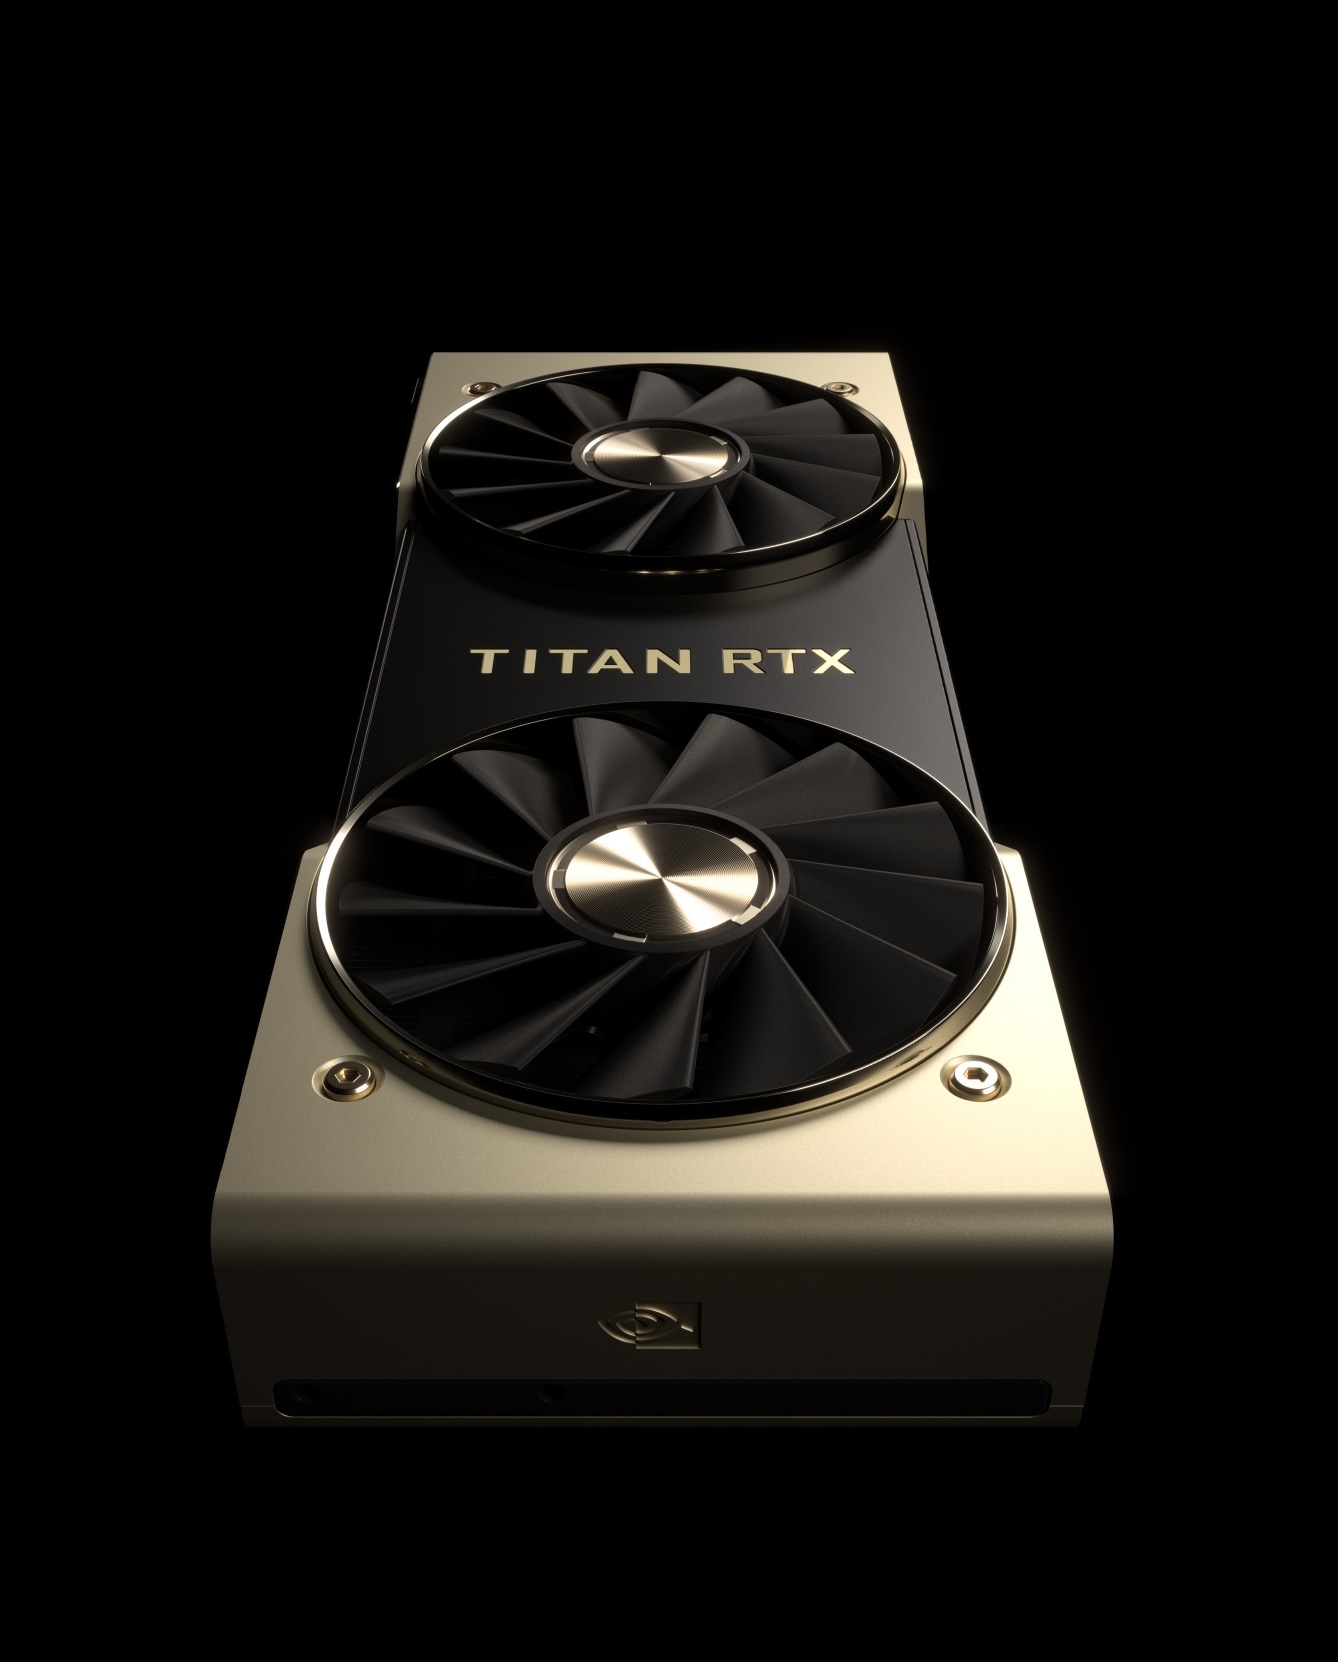 NVIDIA GeForce TITAN RTX